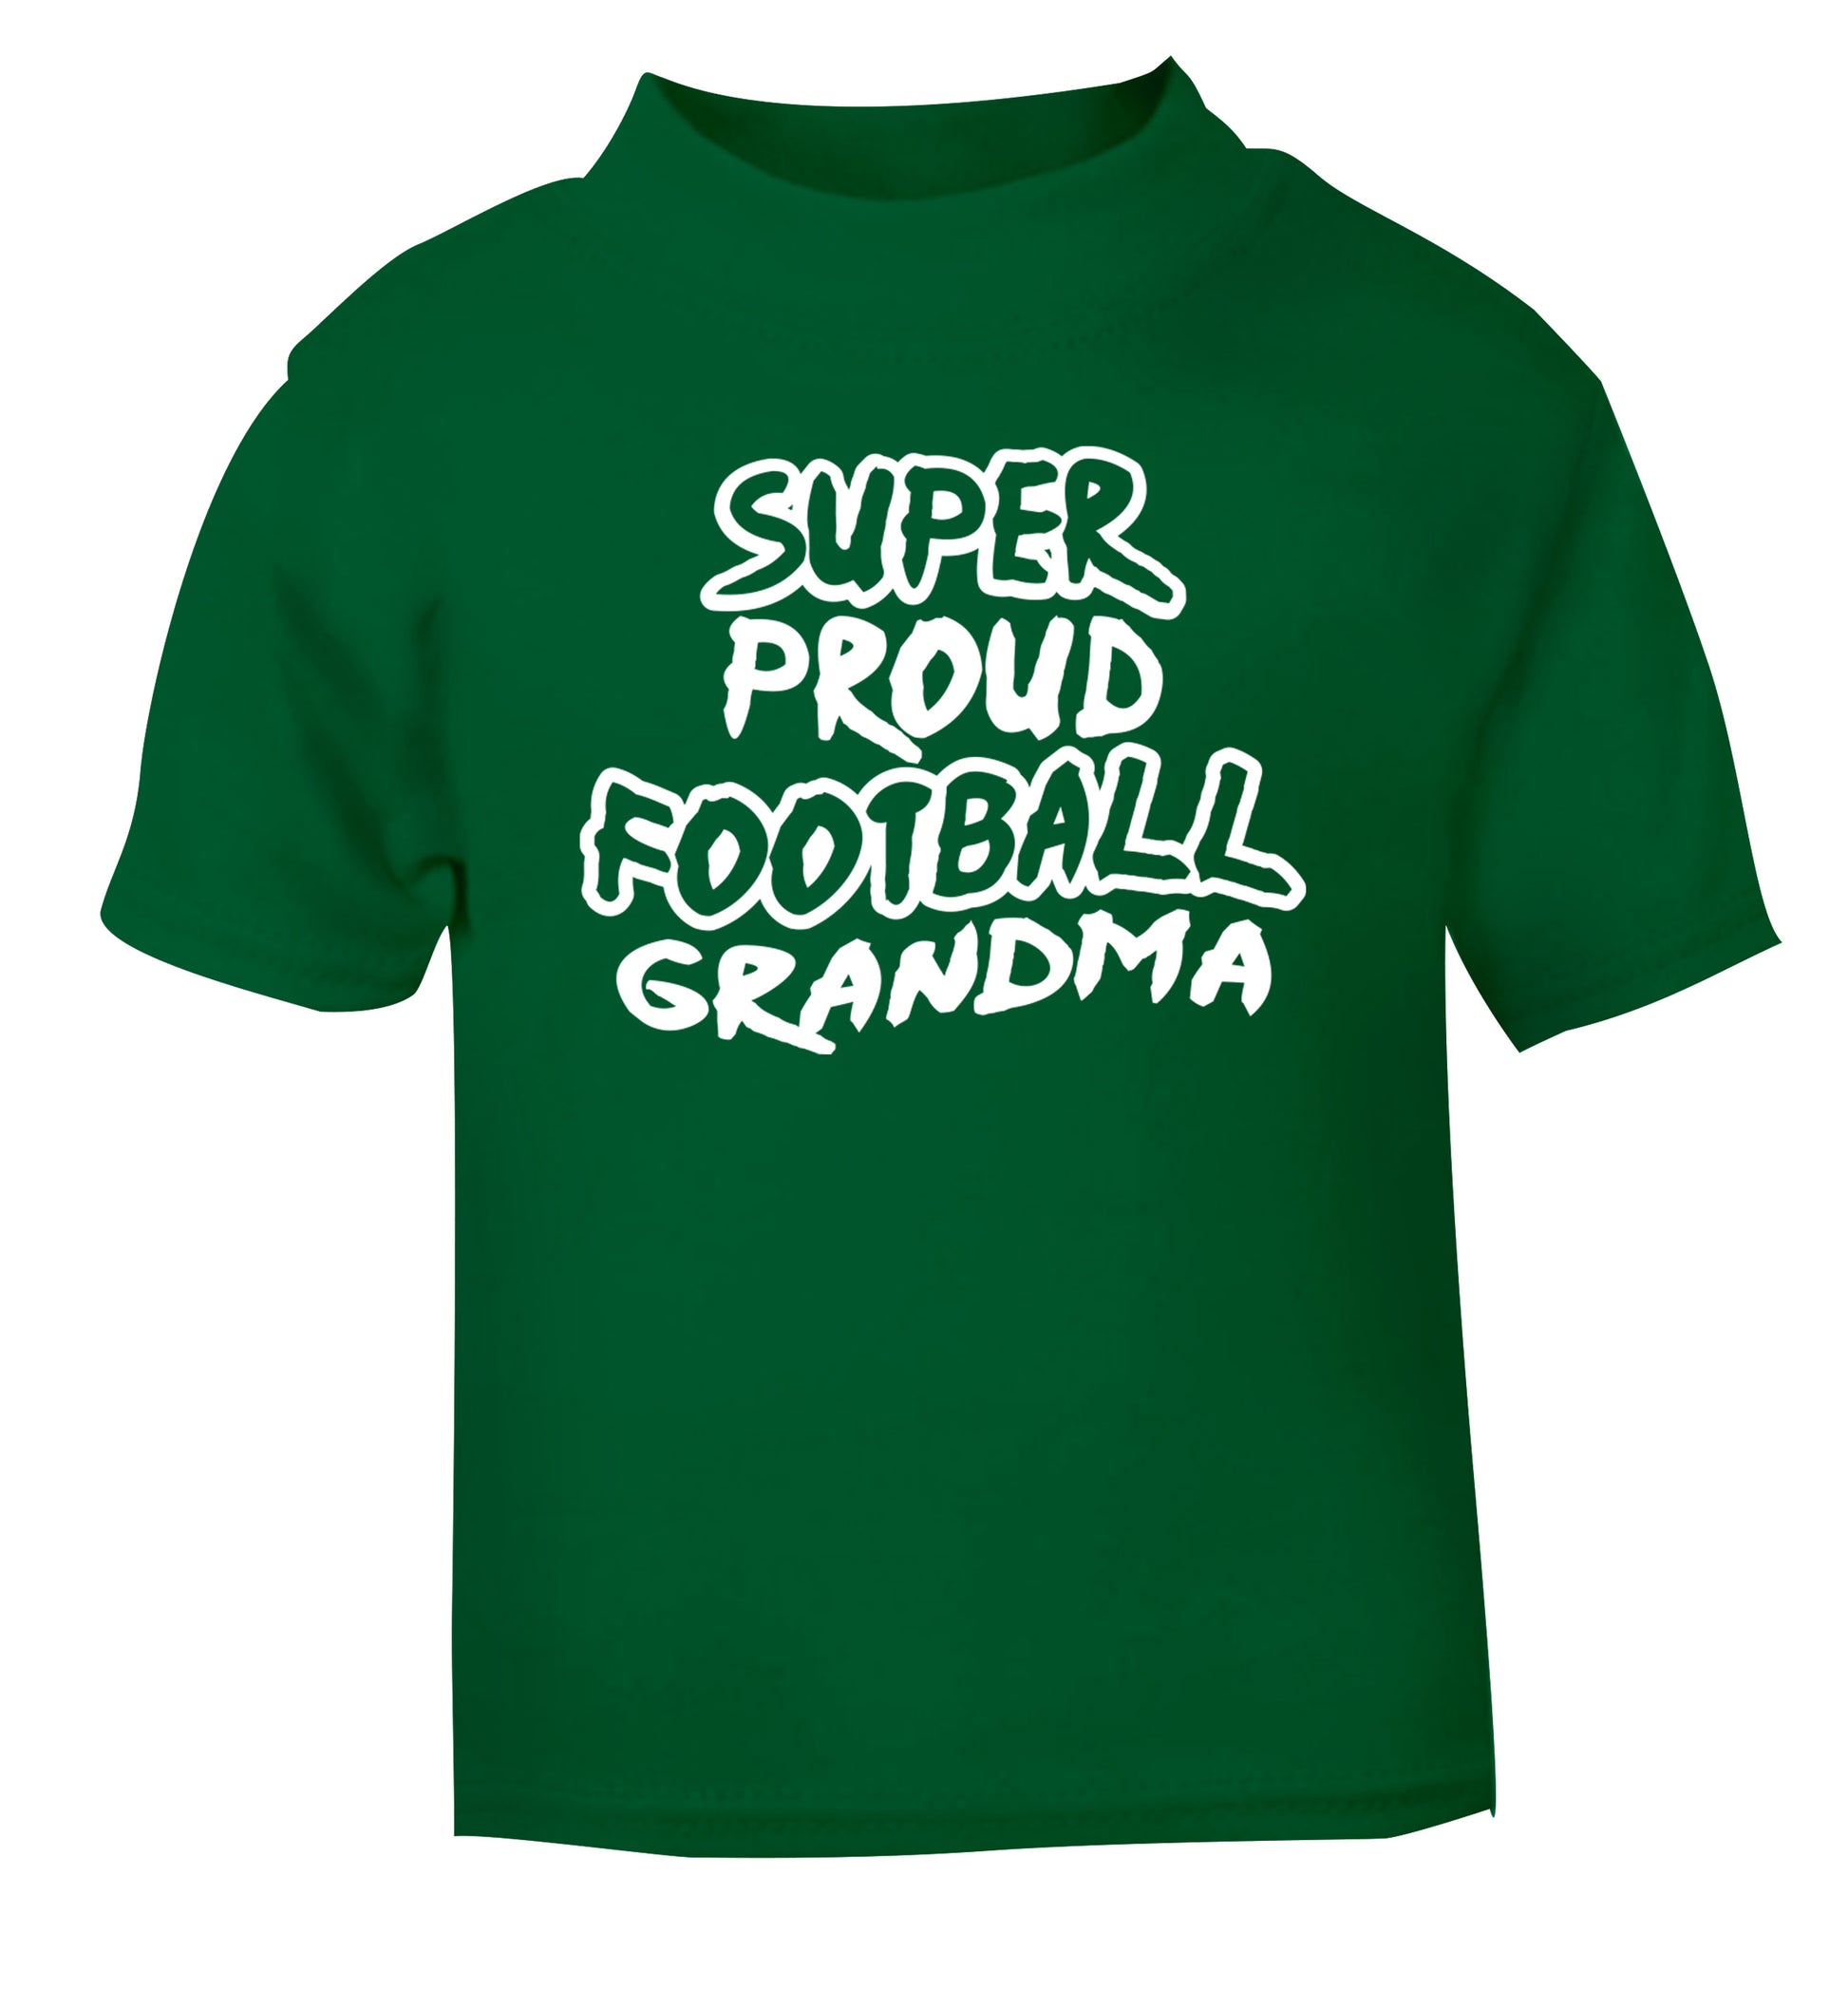 Super proud football grandma green Baby Toddler Tshirt 2 Years